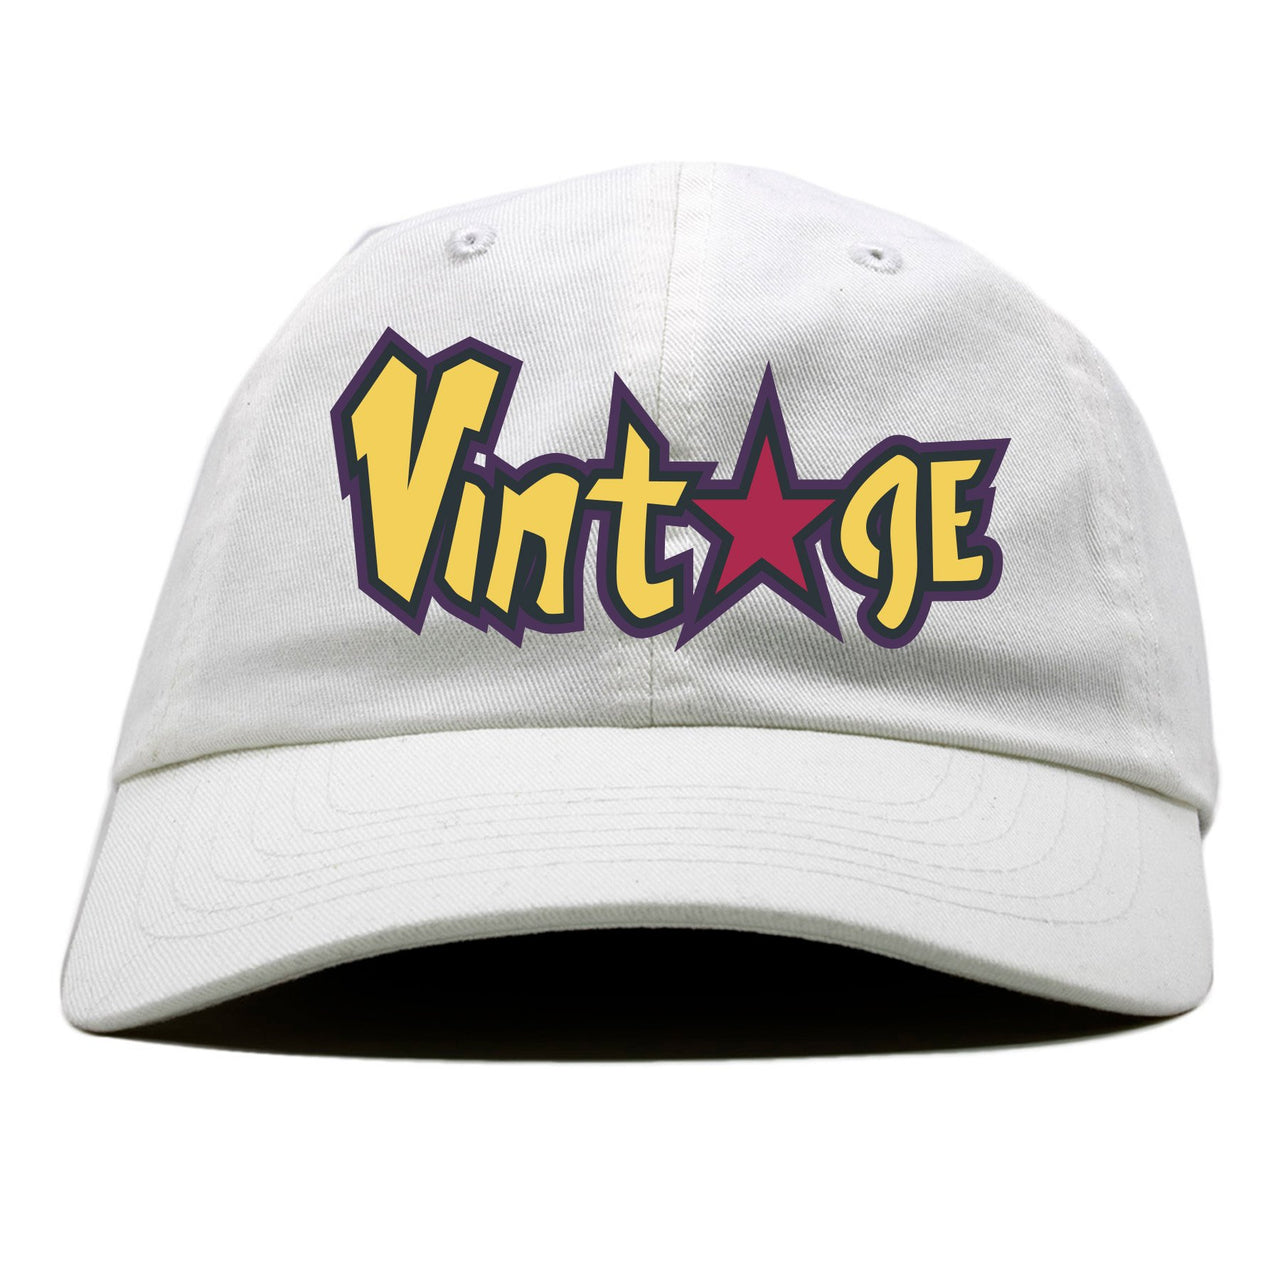 Varsity Maize Mid Blazers Dad Hat | Vintage with Star Logo, White